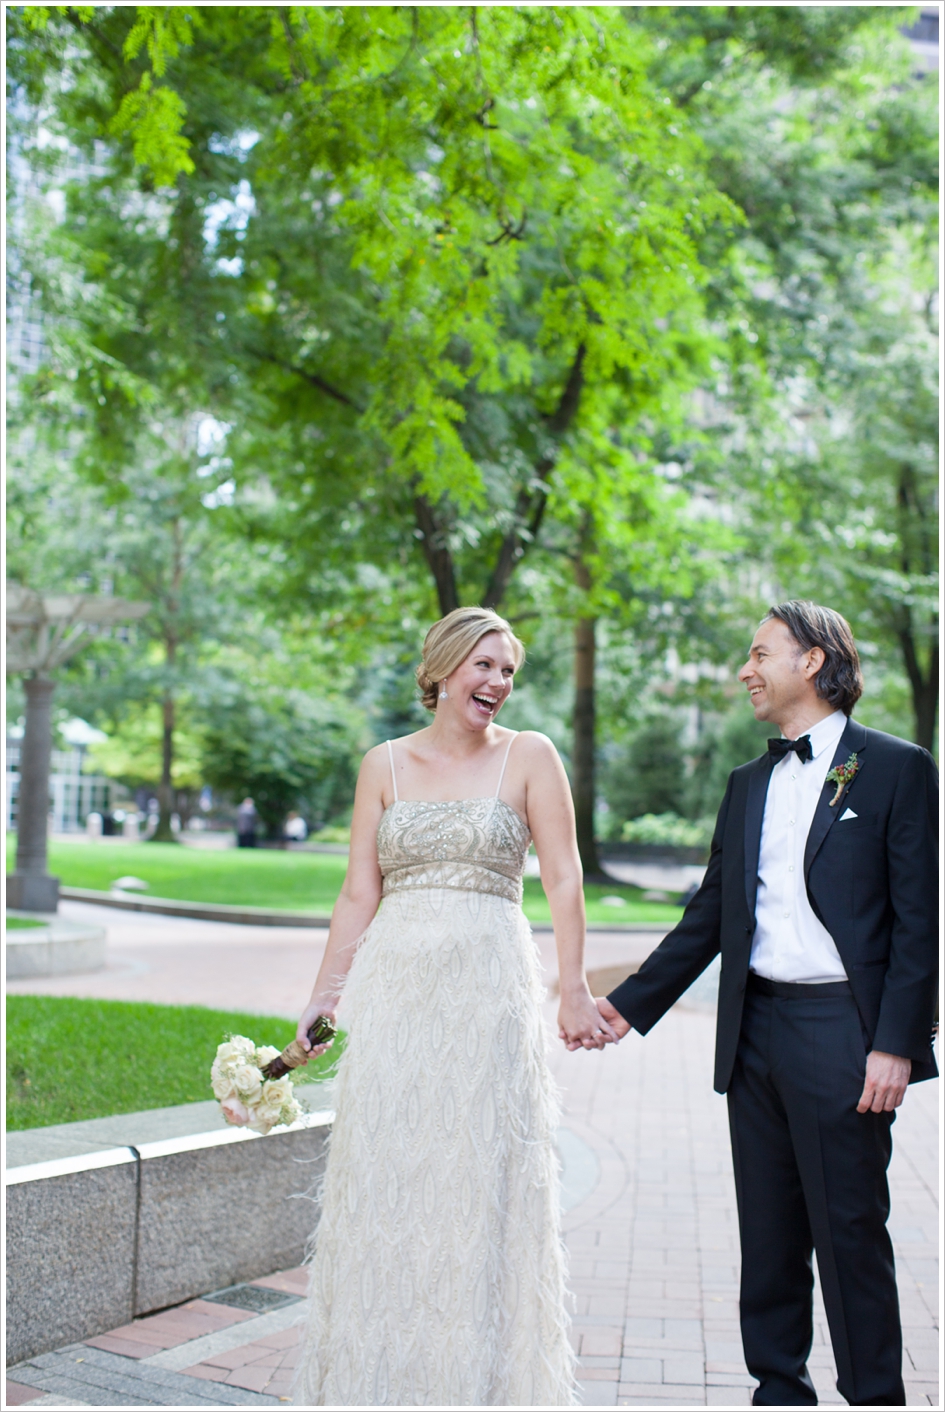 Best wedding photographers in boston